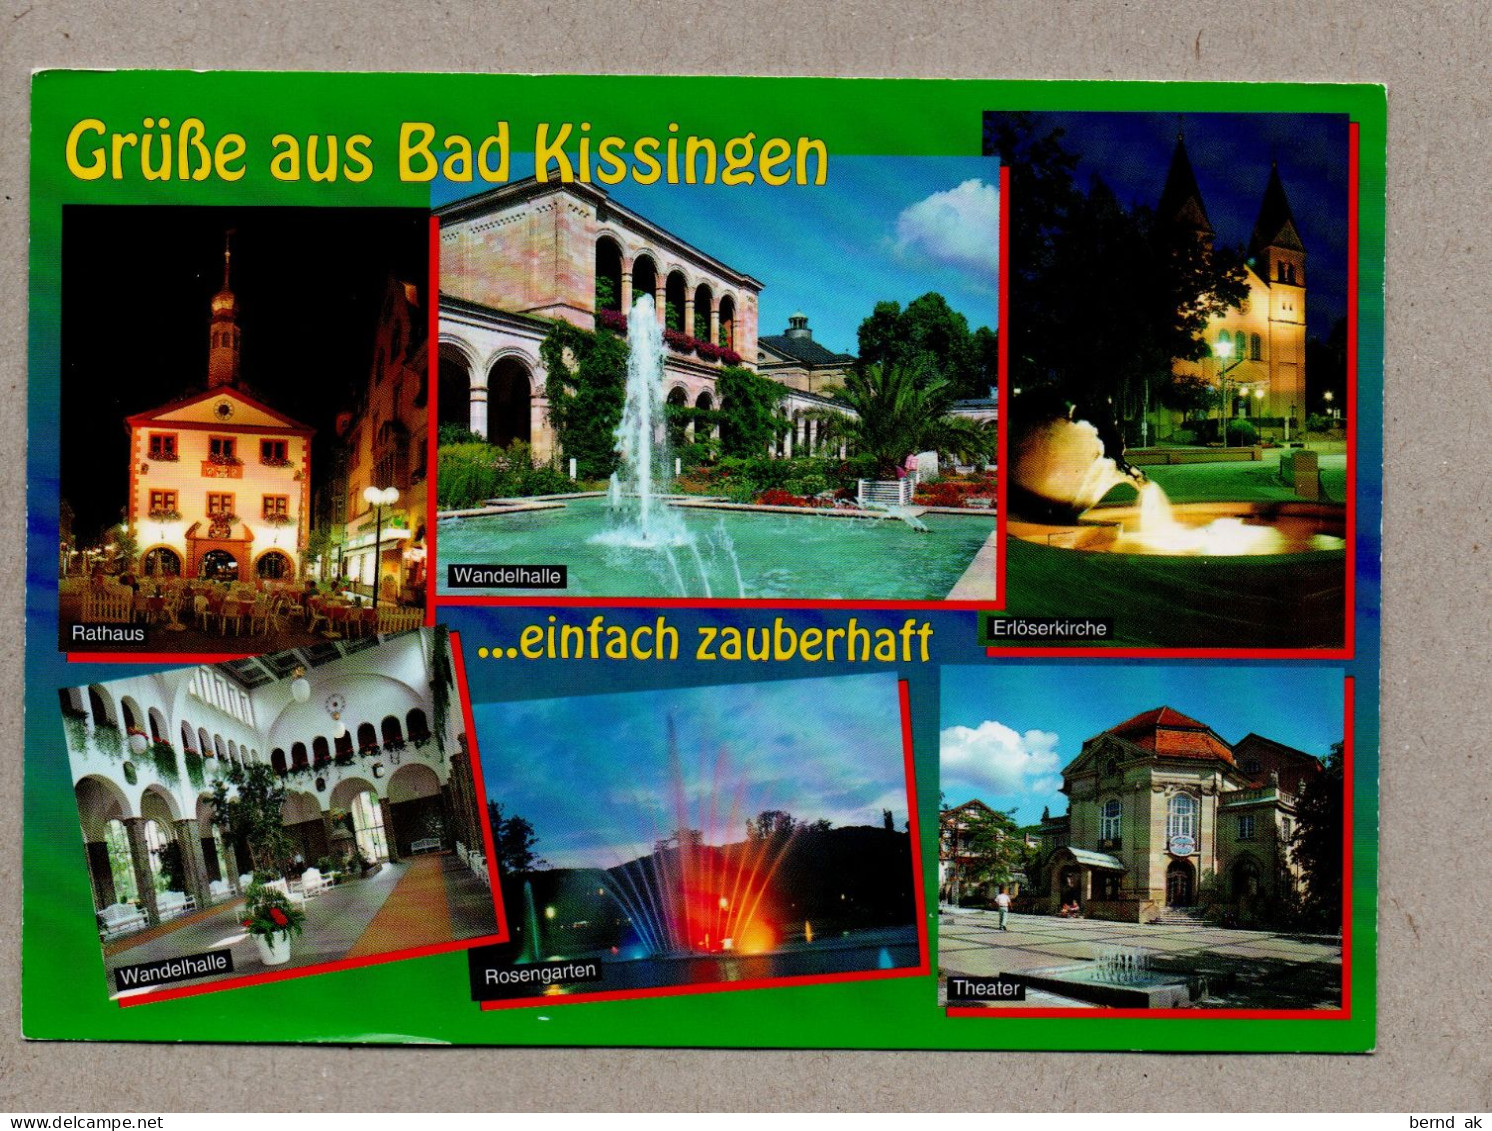 030# BRD - Color-AK : 16 verschied. Karten  - Bad Kissingen (alle im Bild)